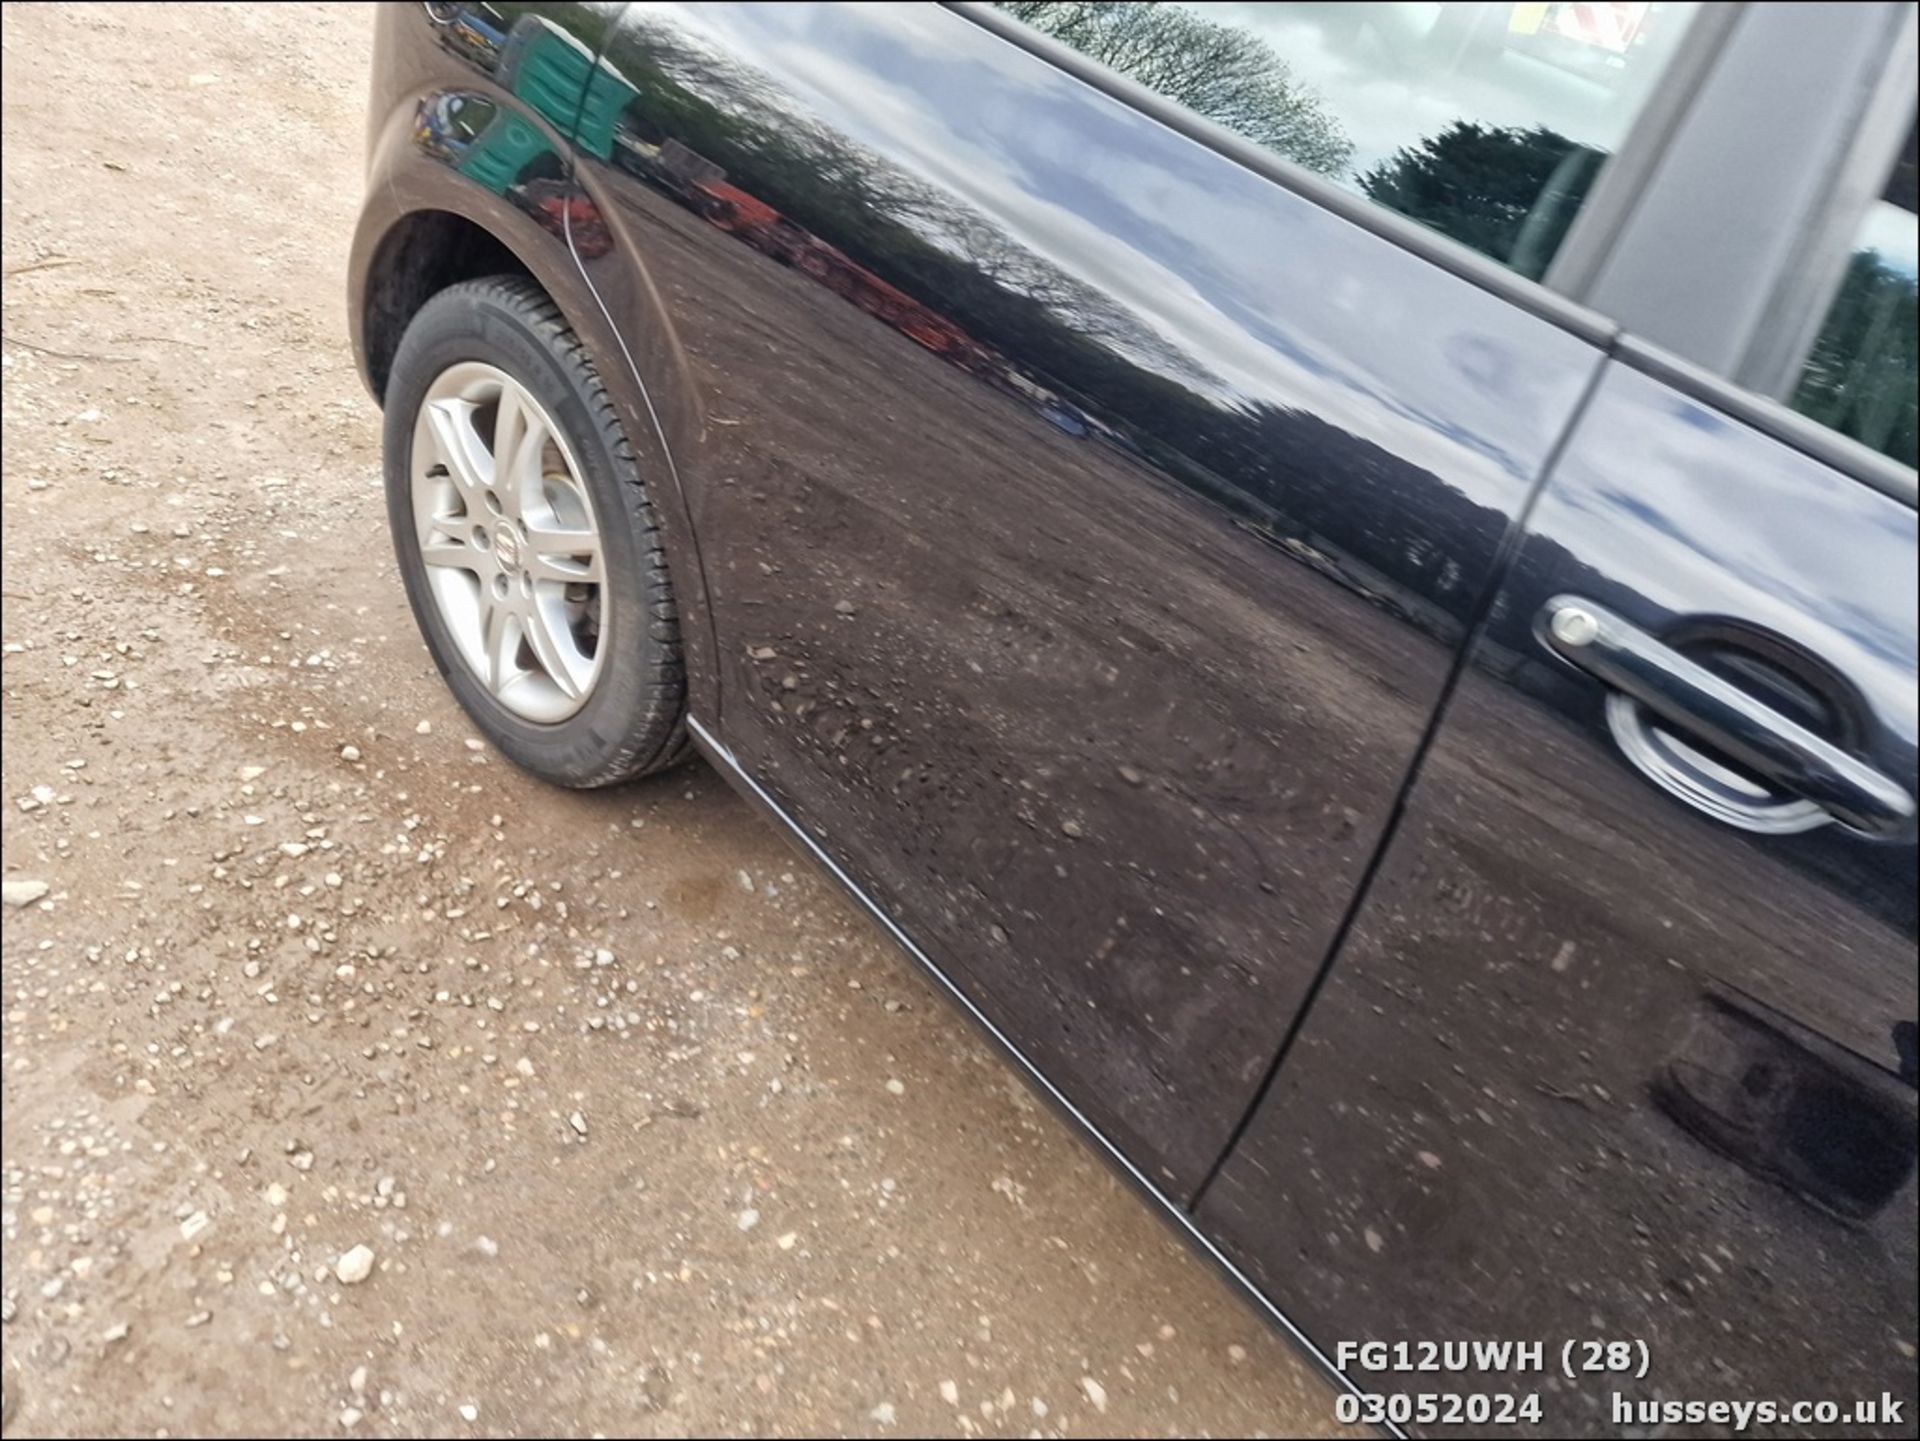 12/12 SEAT LEON S COPA CR TDI ECOMOT - 1598cc 5dr Hatchback (Black, 123k) - Image 29 of 45